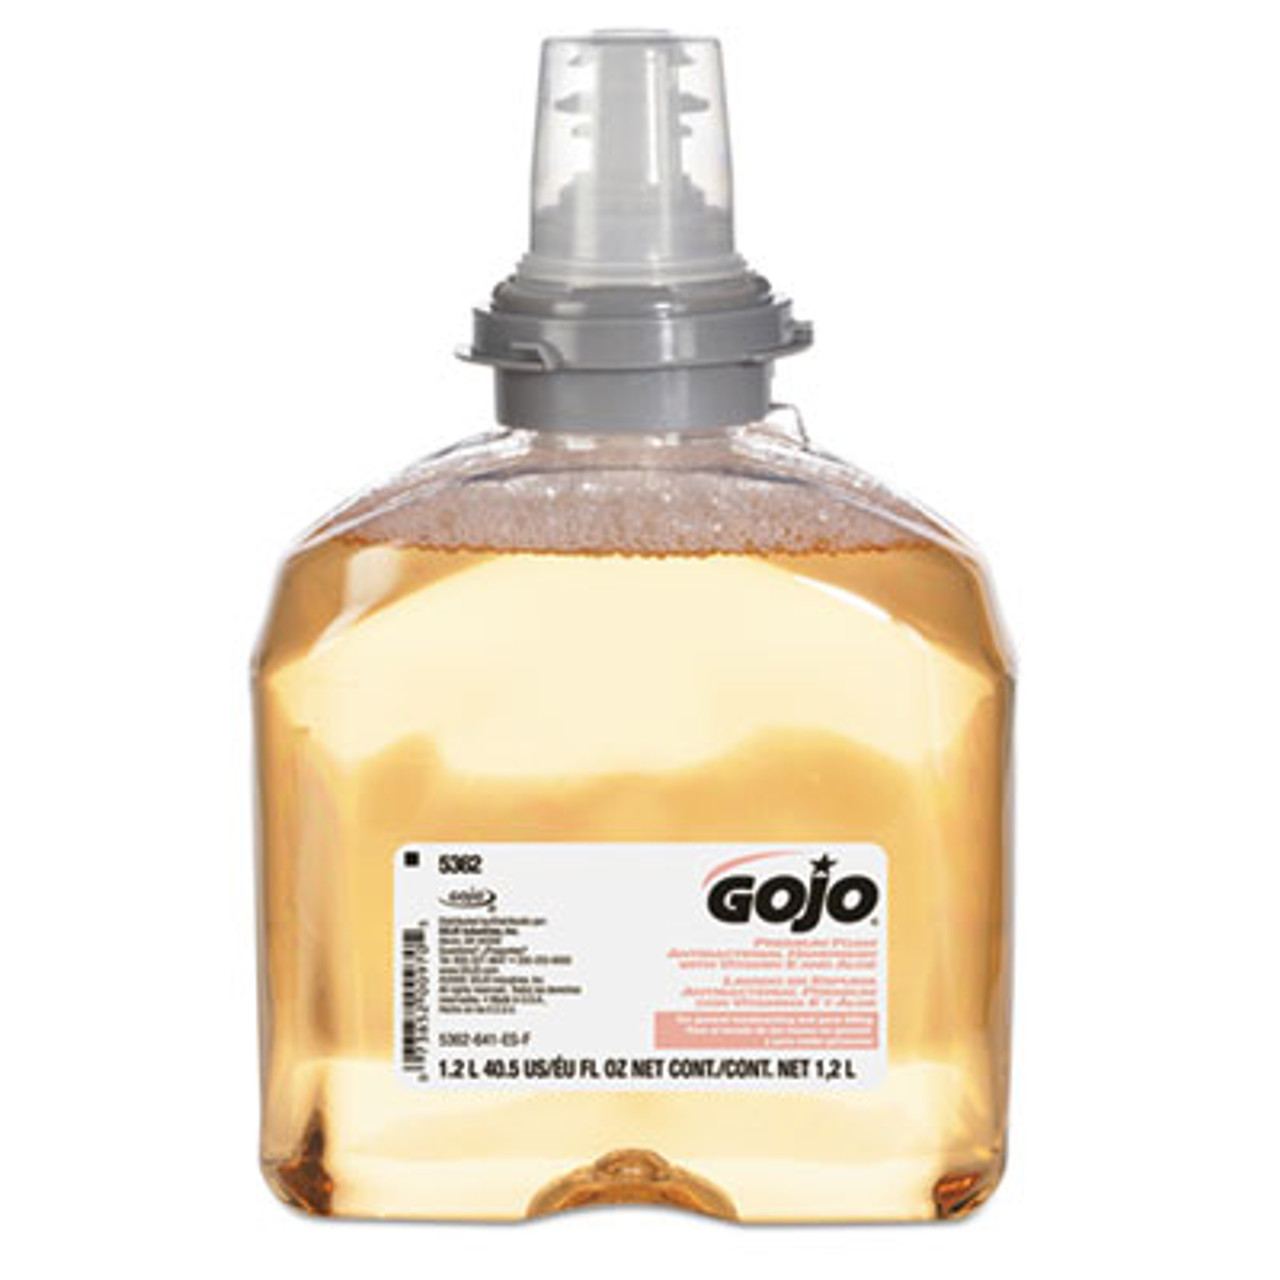 GOJ 5362-02 - $52.85 - Premium Foam Antibacterial Hand Wash, Fresh